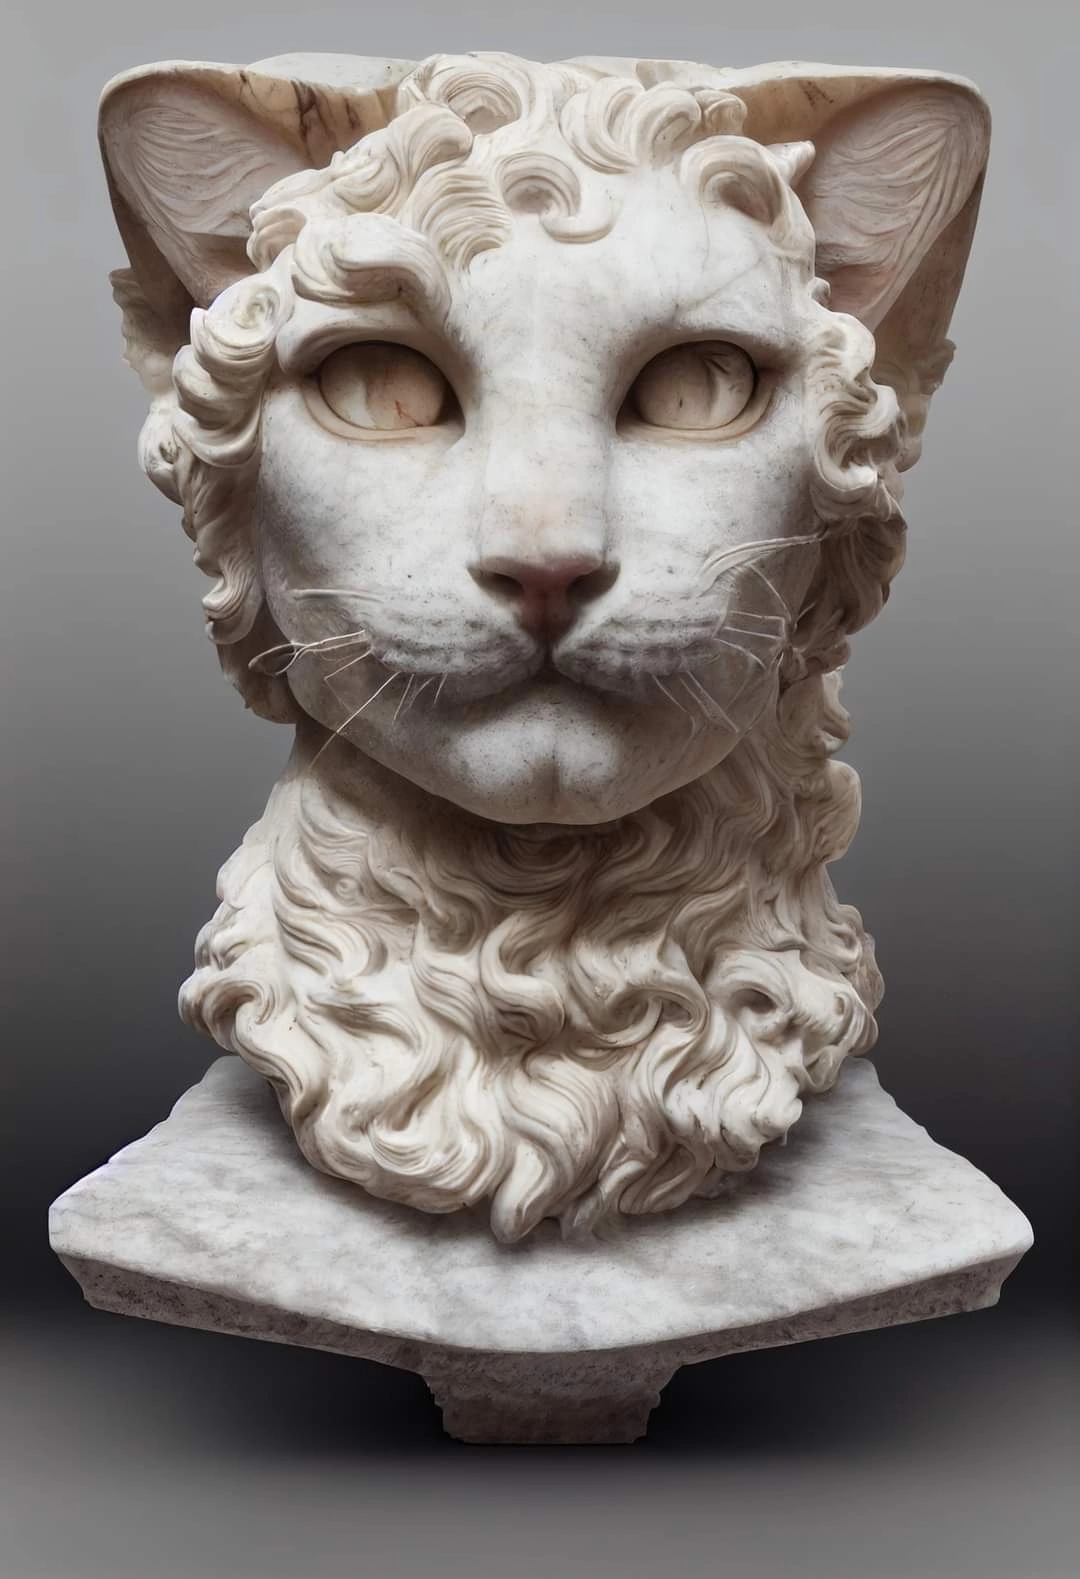 Some cat busts - cat, Sculpture, Art, Longpost, Нейронные сети